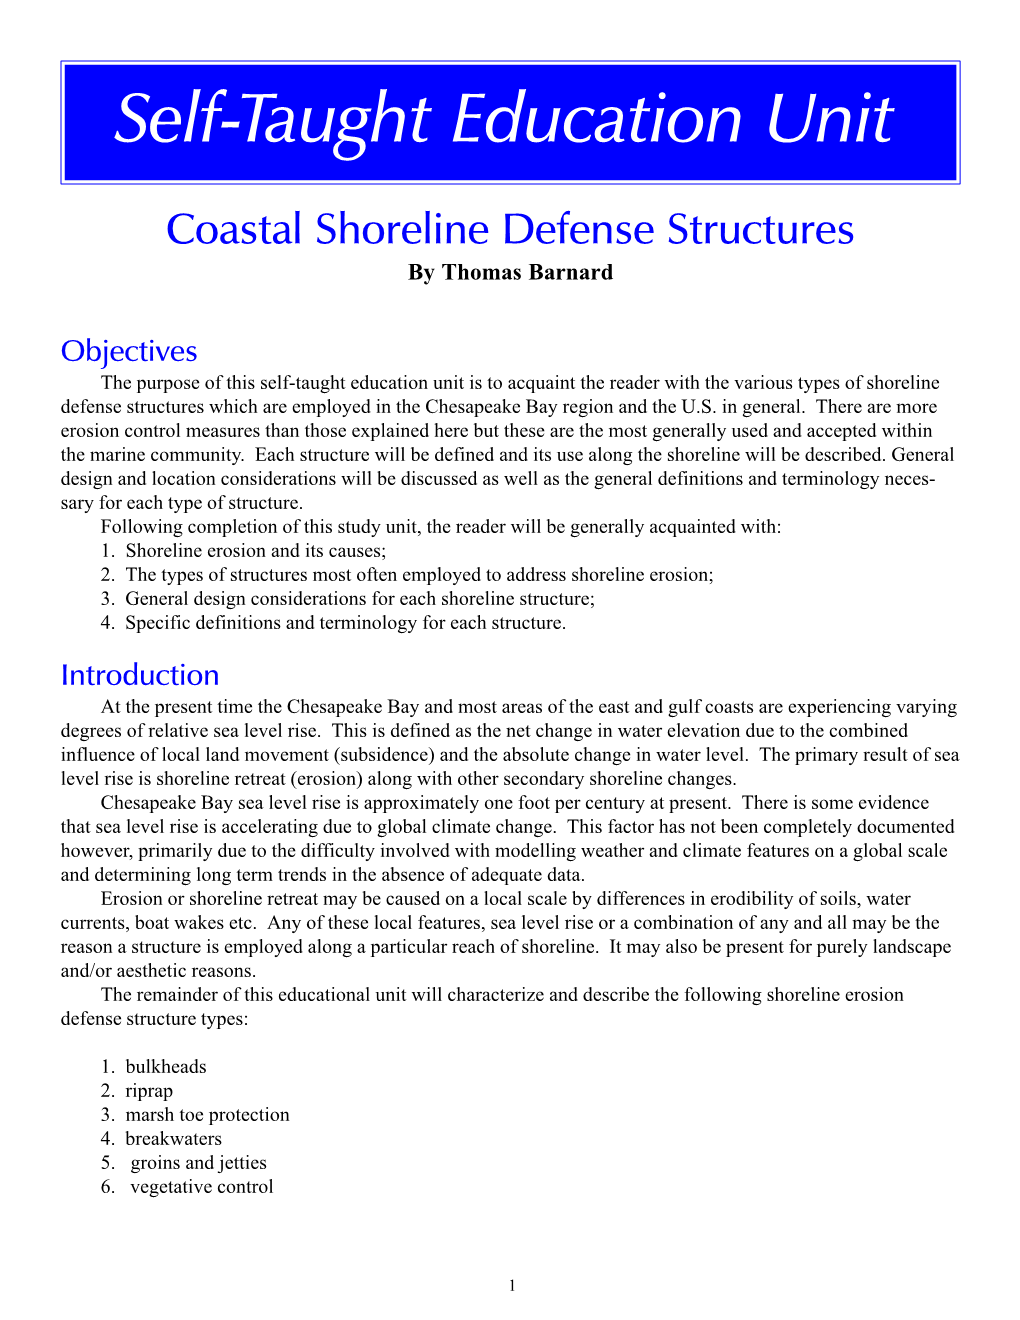 Self-Taught Education Unit Coastal Shoreline Defense Structures by Thomas Barnard